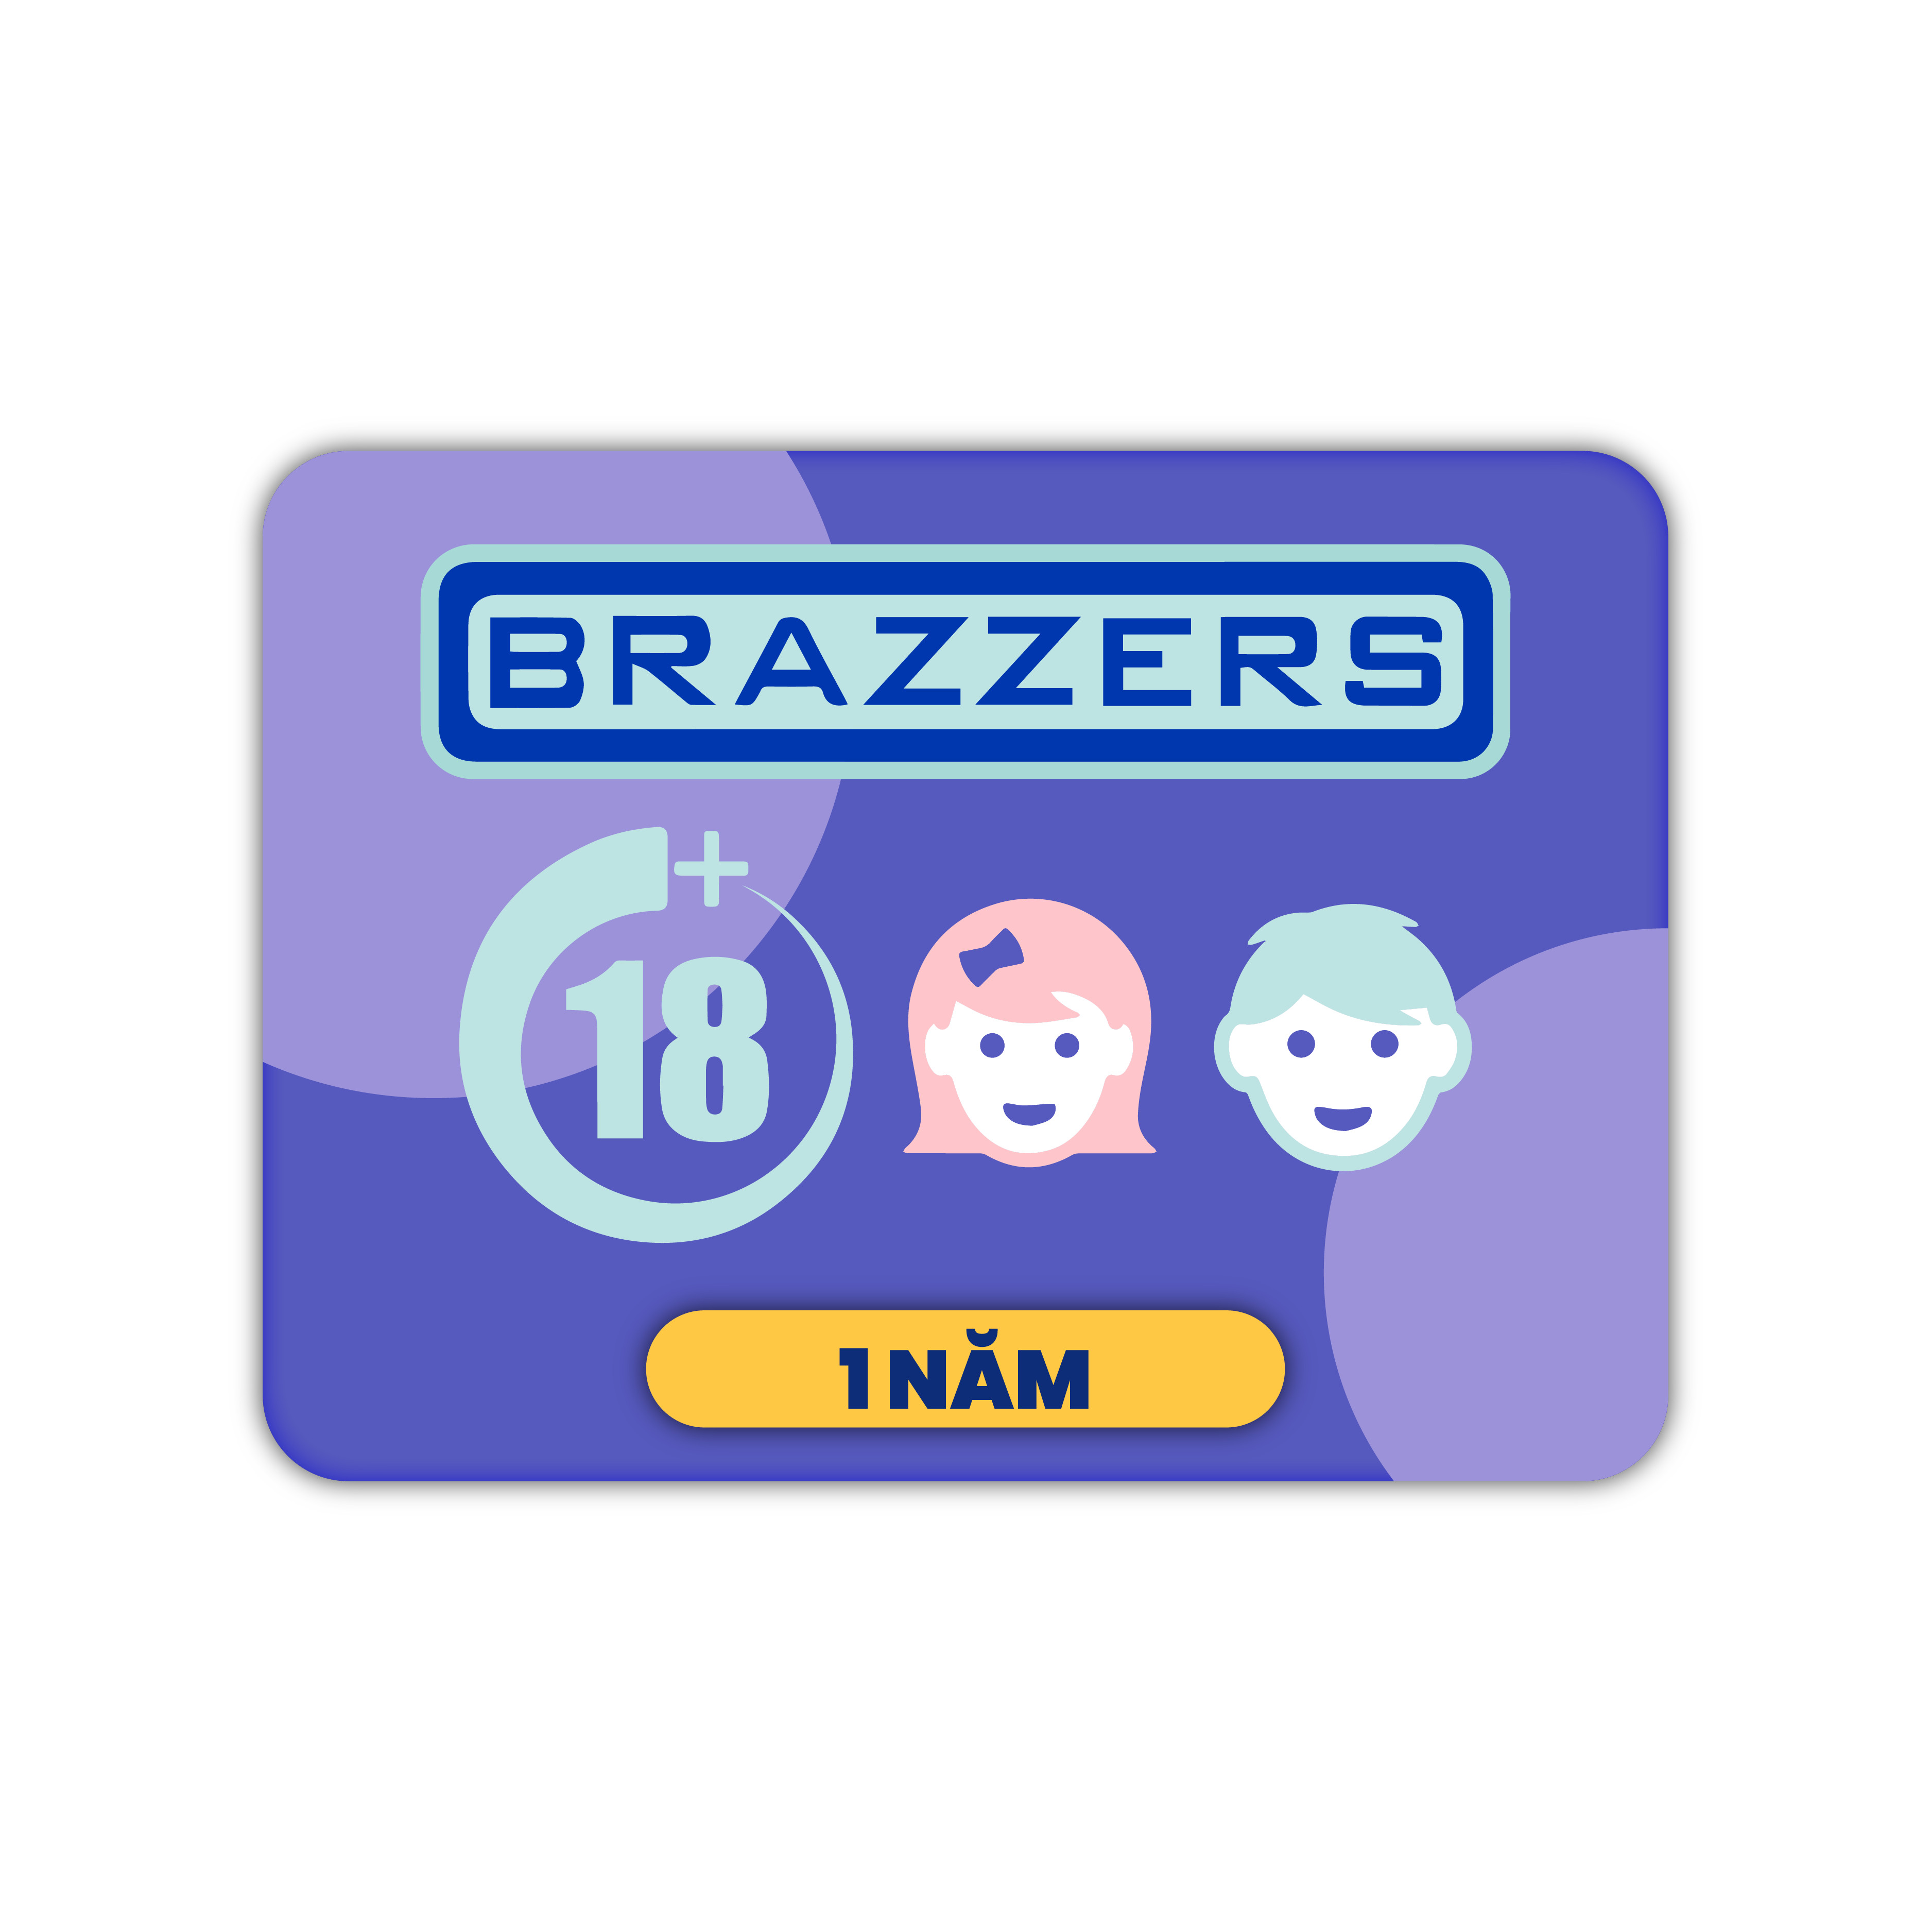 Mua Brazzer Premium 12 tháng